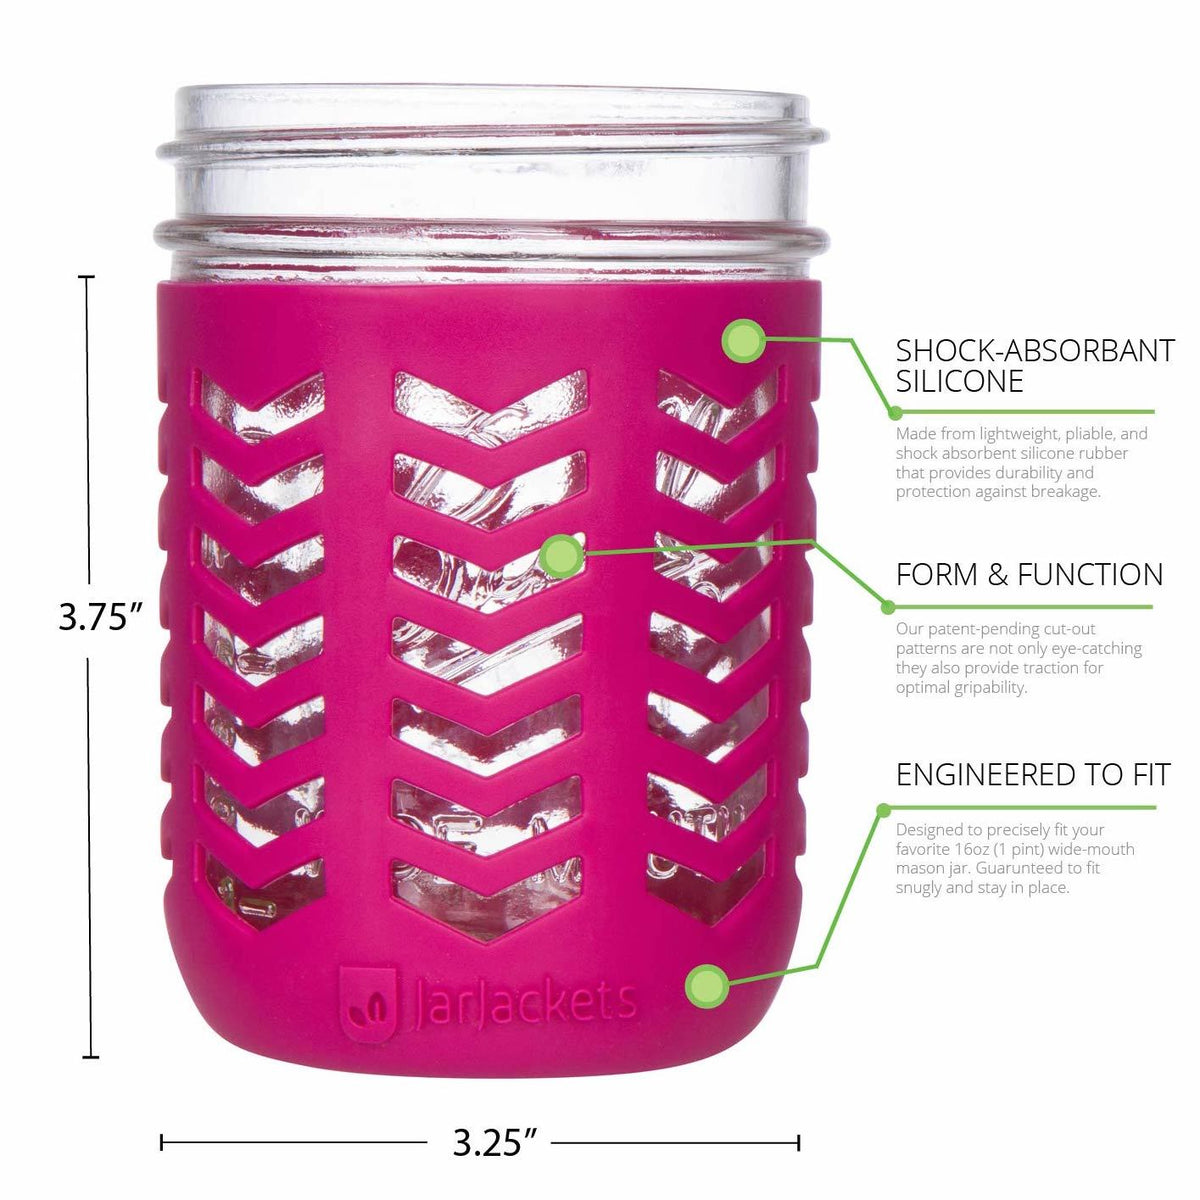 Silicone Mason Jar Protector Sleeves - 16oz (1 pint) Wide-Mouth Jars -  JarJackets